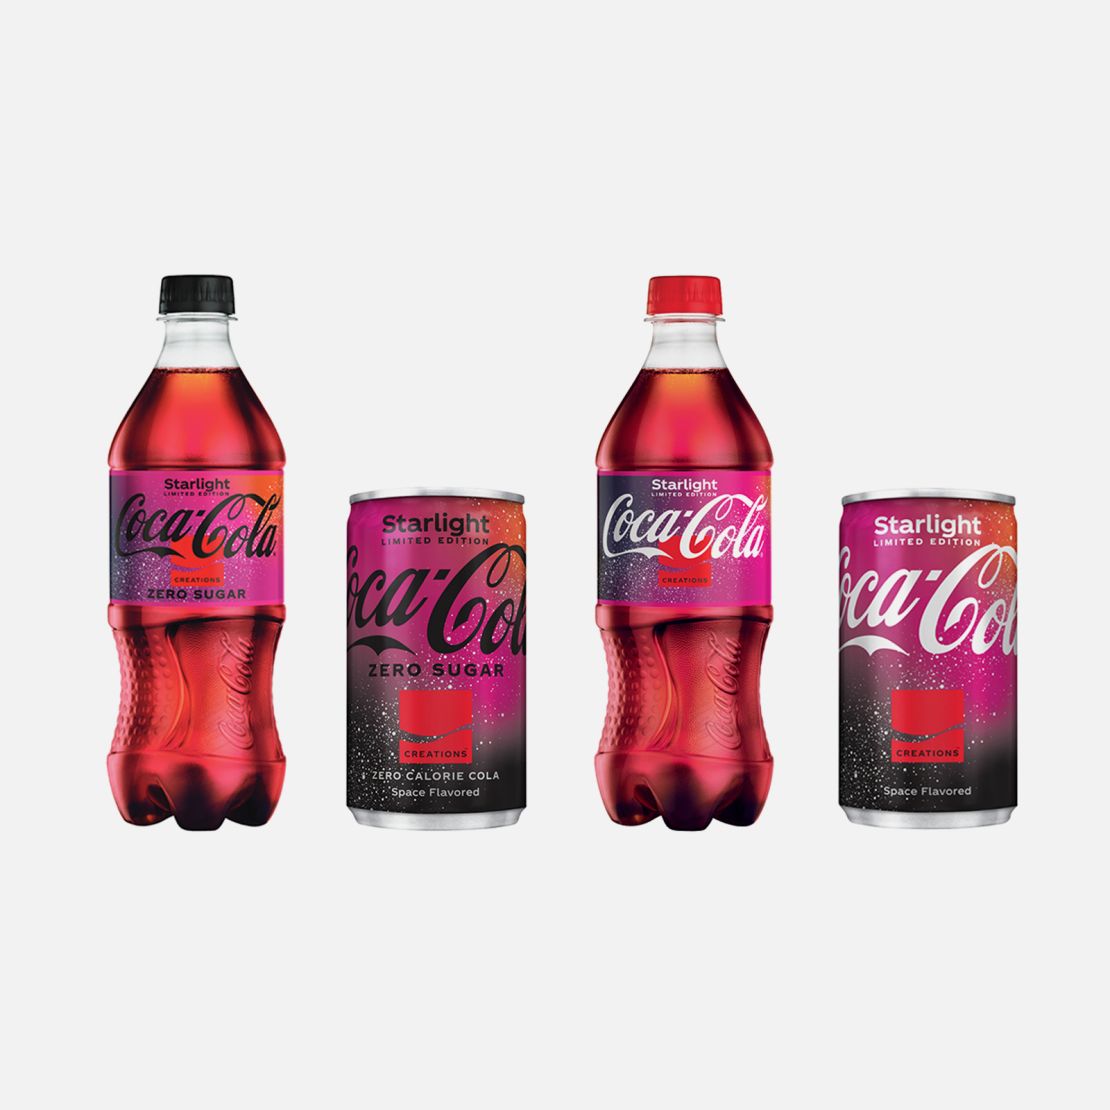 Real Magic: New Brand Platform for Coca-Cola Trademark